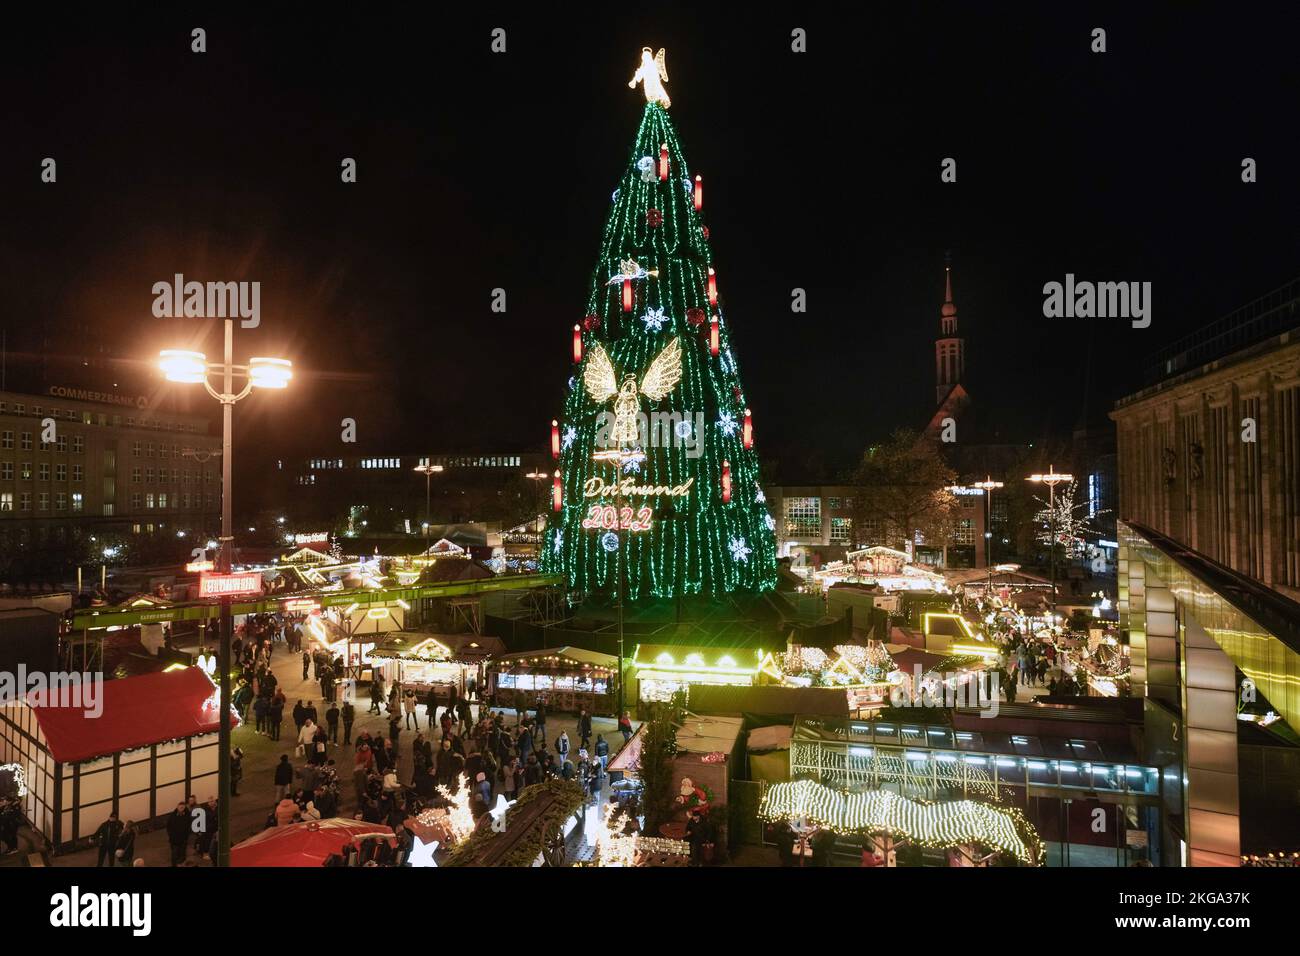 Dortmund, Germania, 22 novembre 2022: Il più grande albero di Natale del mondo al mercato di Natale di Dortmund è alto 45 metri, consiste di 1.000 alberi di abete rosso dalla Sauerland ed è appeso con 48.000 luci a LED. Un angelo alto quattro metri splende sulla cima. --- Dortmund, 22.11.2022: Der größte Weihnachtsbaum der Welt auf dem Dortmunder Weihnachtsmakt ist 45 Meter hoch, besteht aus 1000 Rotfichten aus dem Sauerland und ist mit 48,000 LED-Lichtern behängt. Auf der Spitze leuchtet ein vier Meter große Engel. Foto Stock